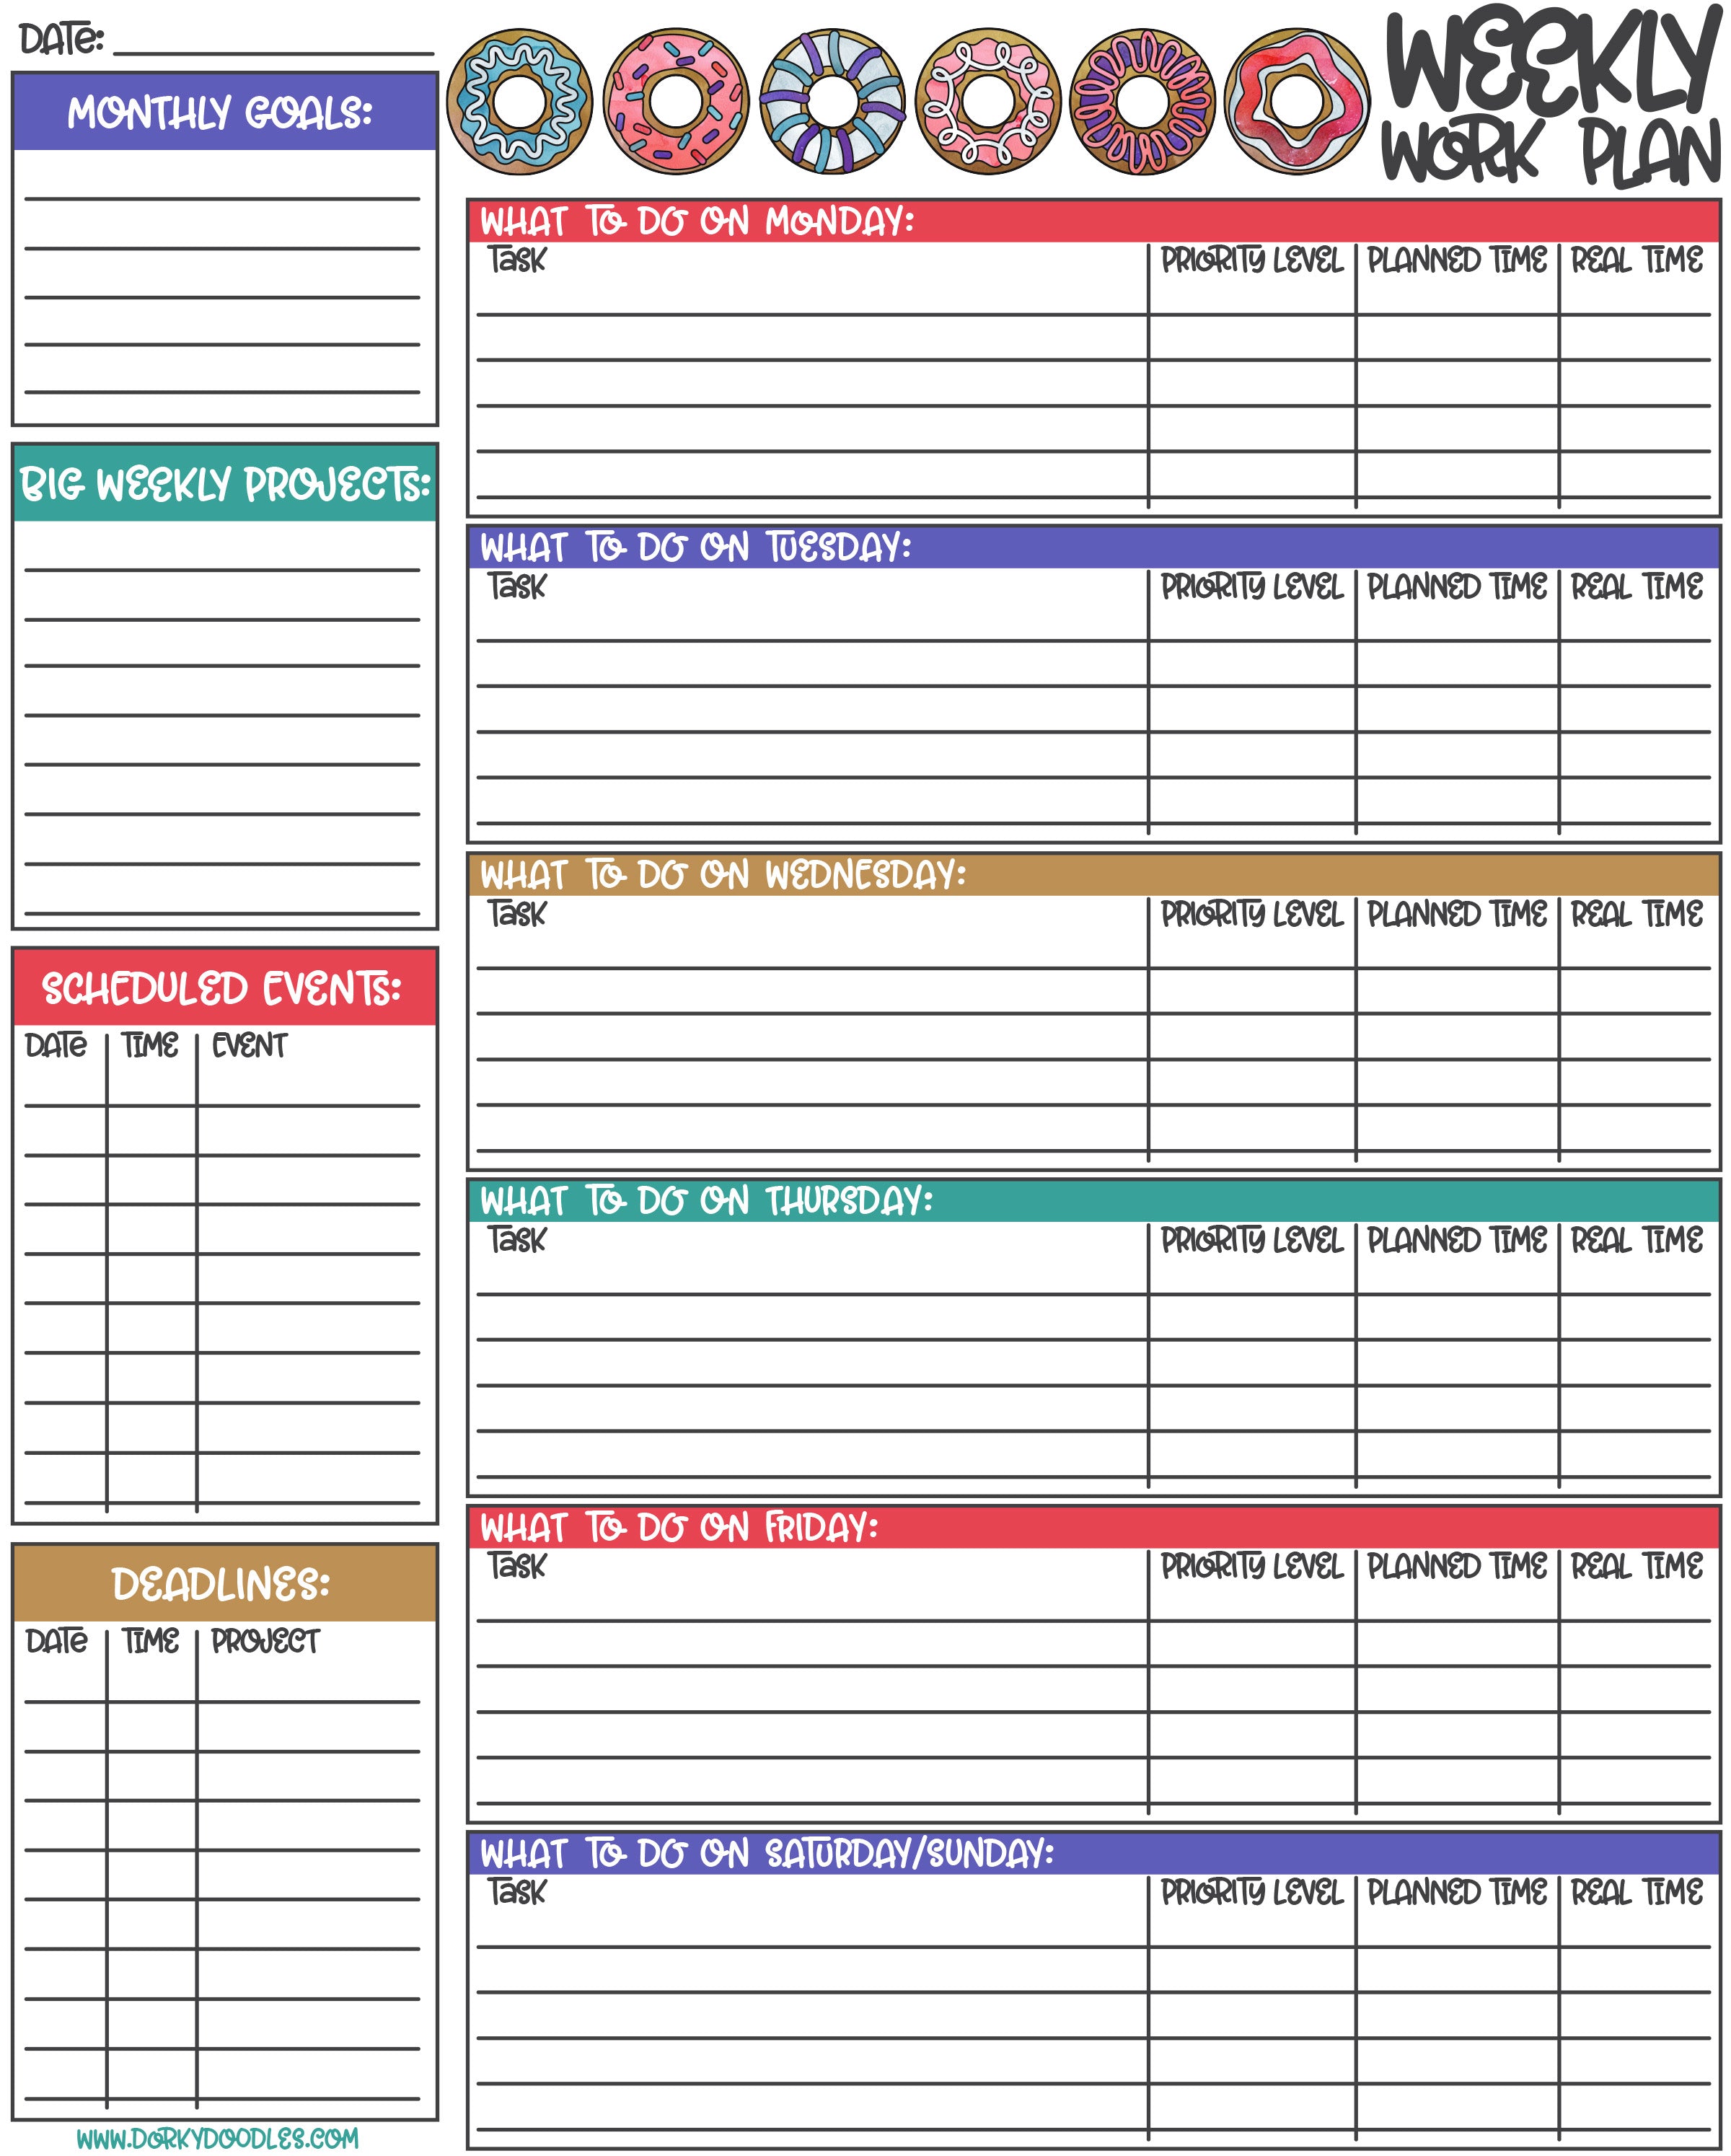 21-weekly-work-plan-template-doctemplates